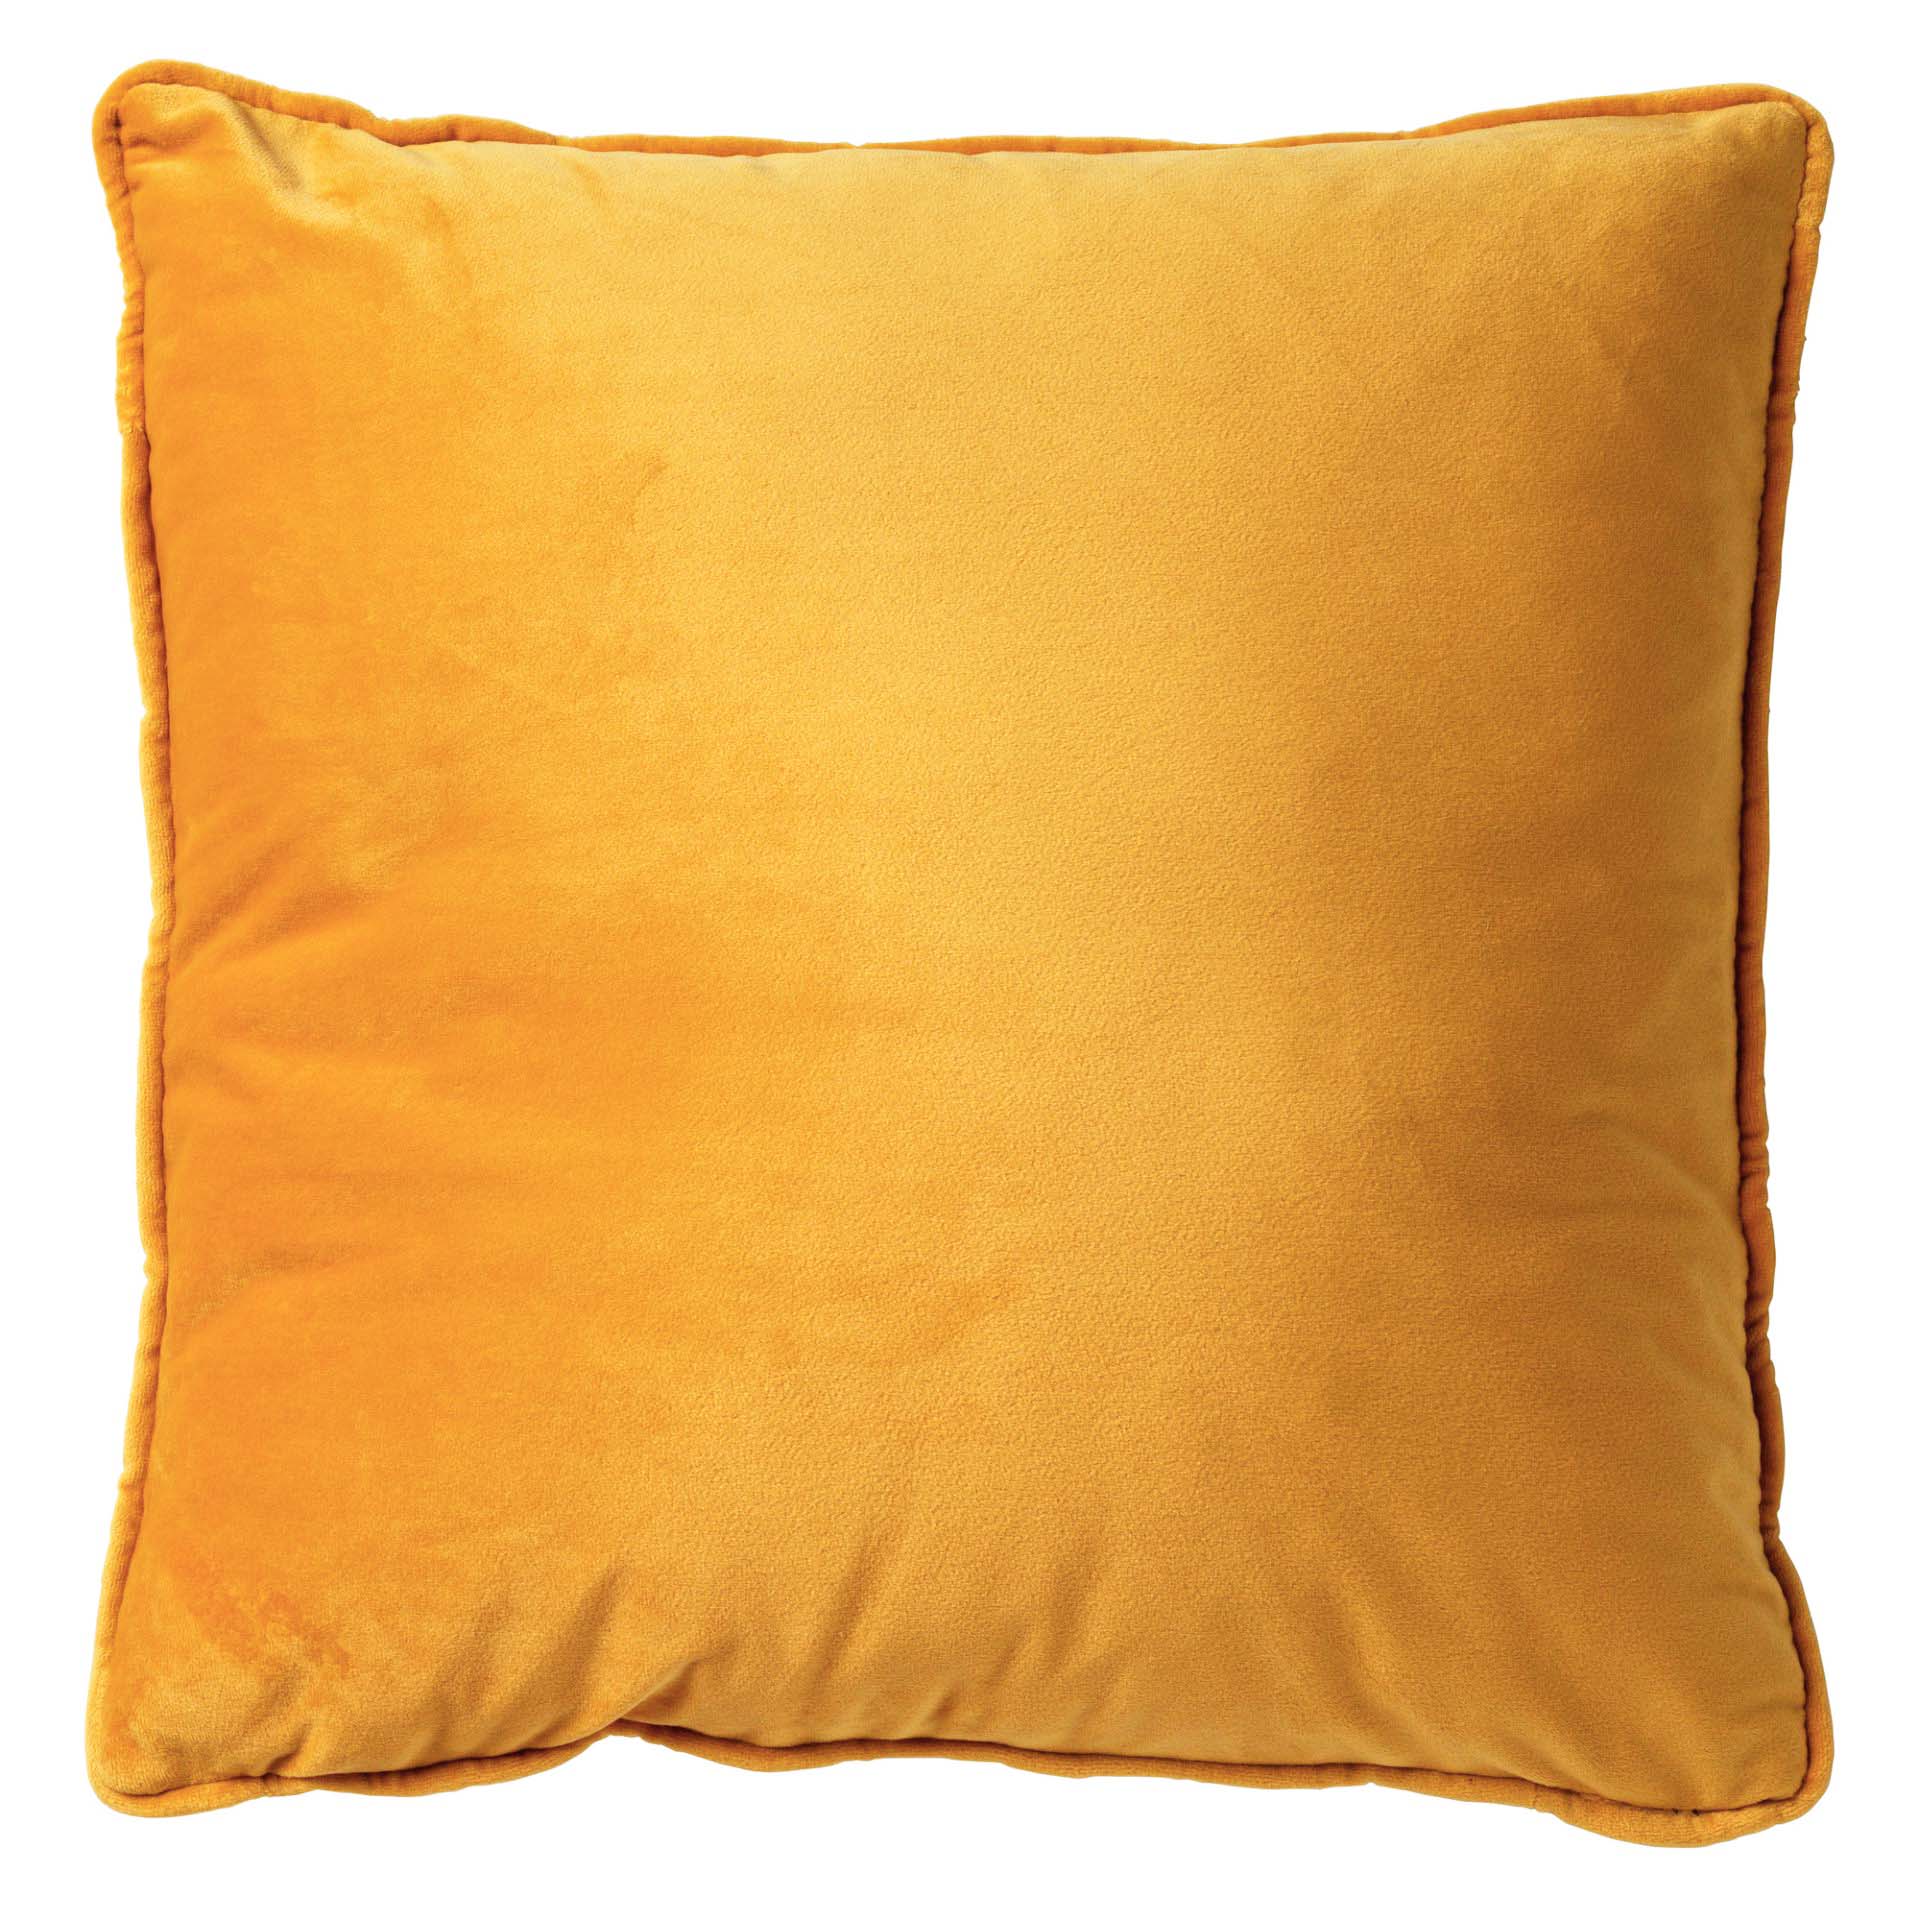 FINN - Kussenhoes Golden Glow 45x45 cm - geel